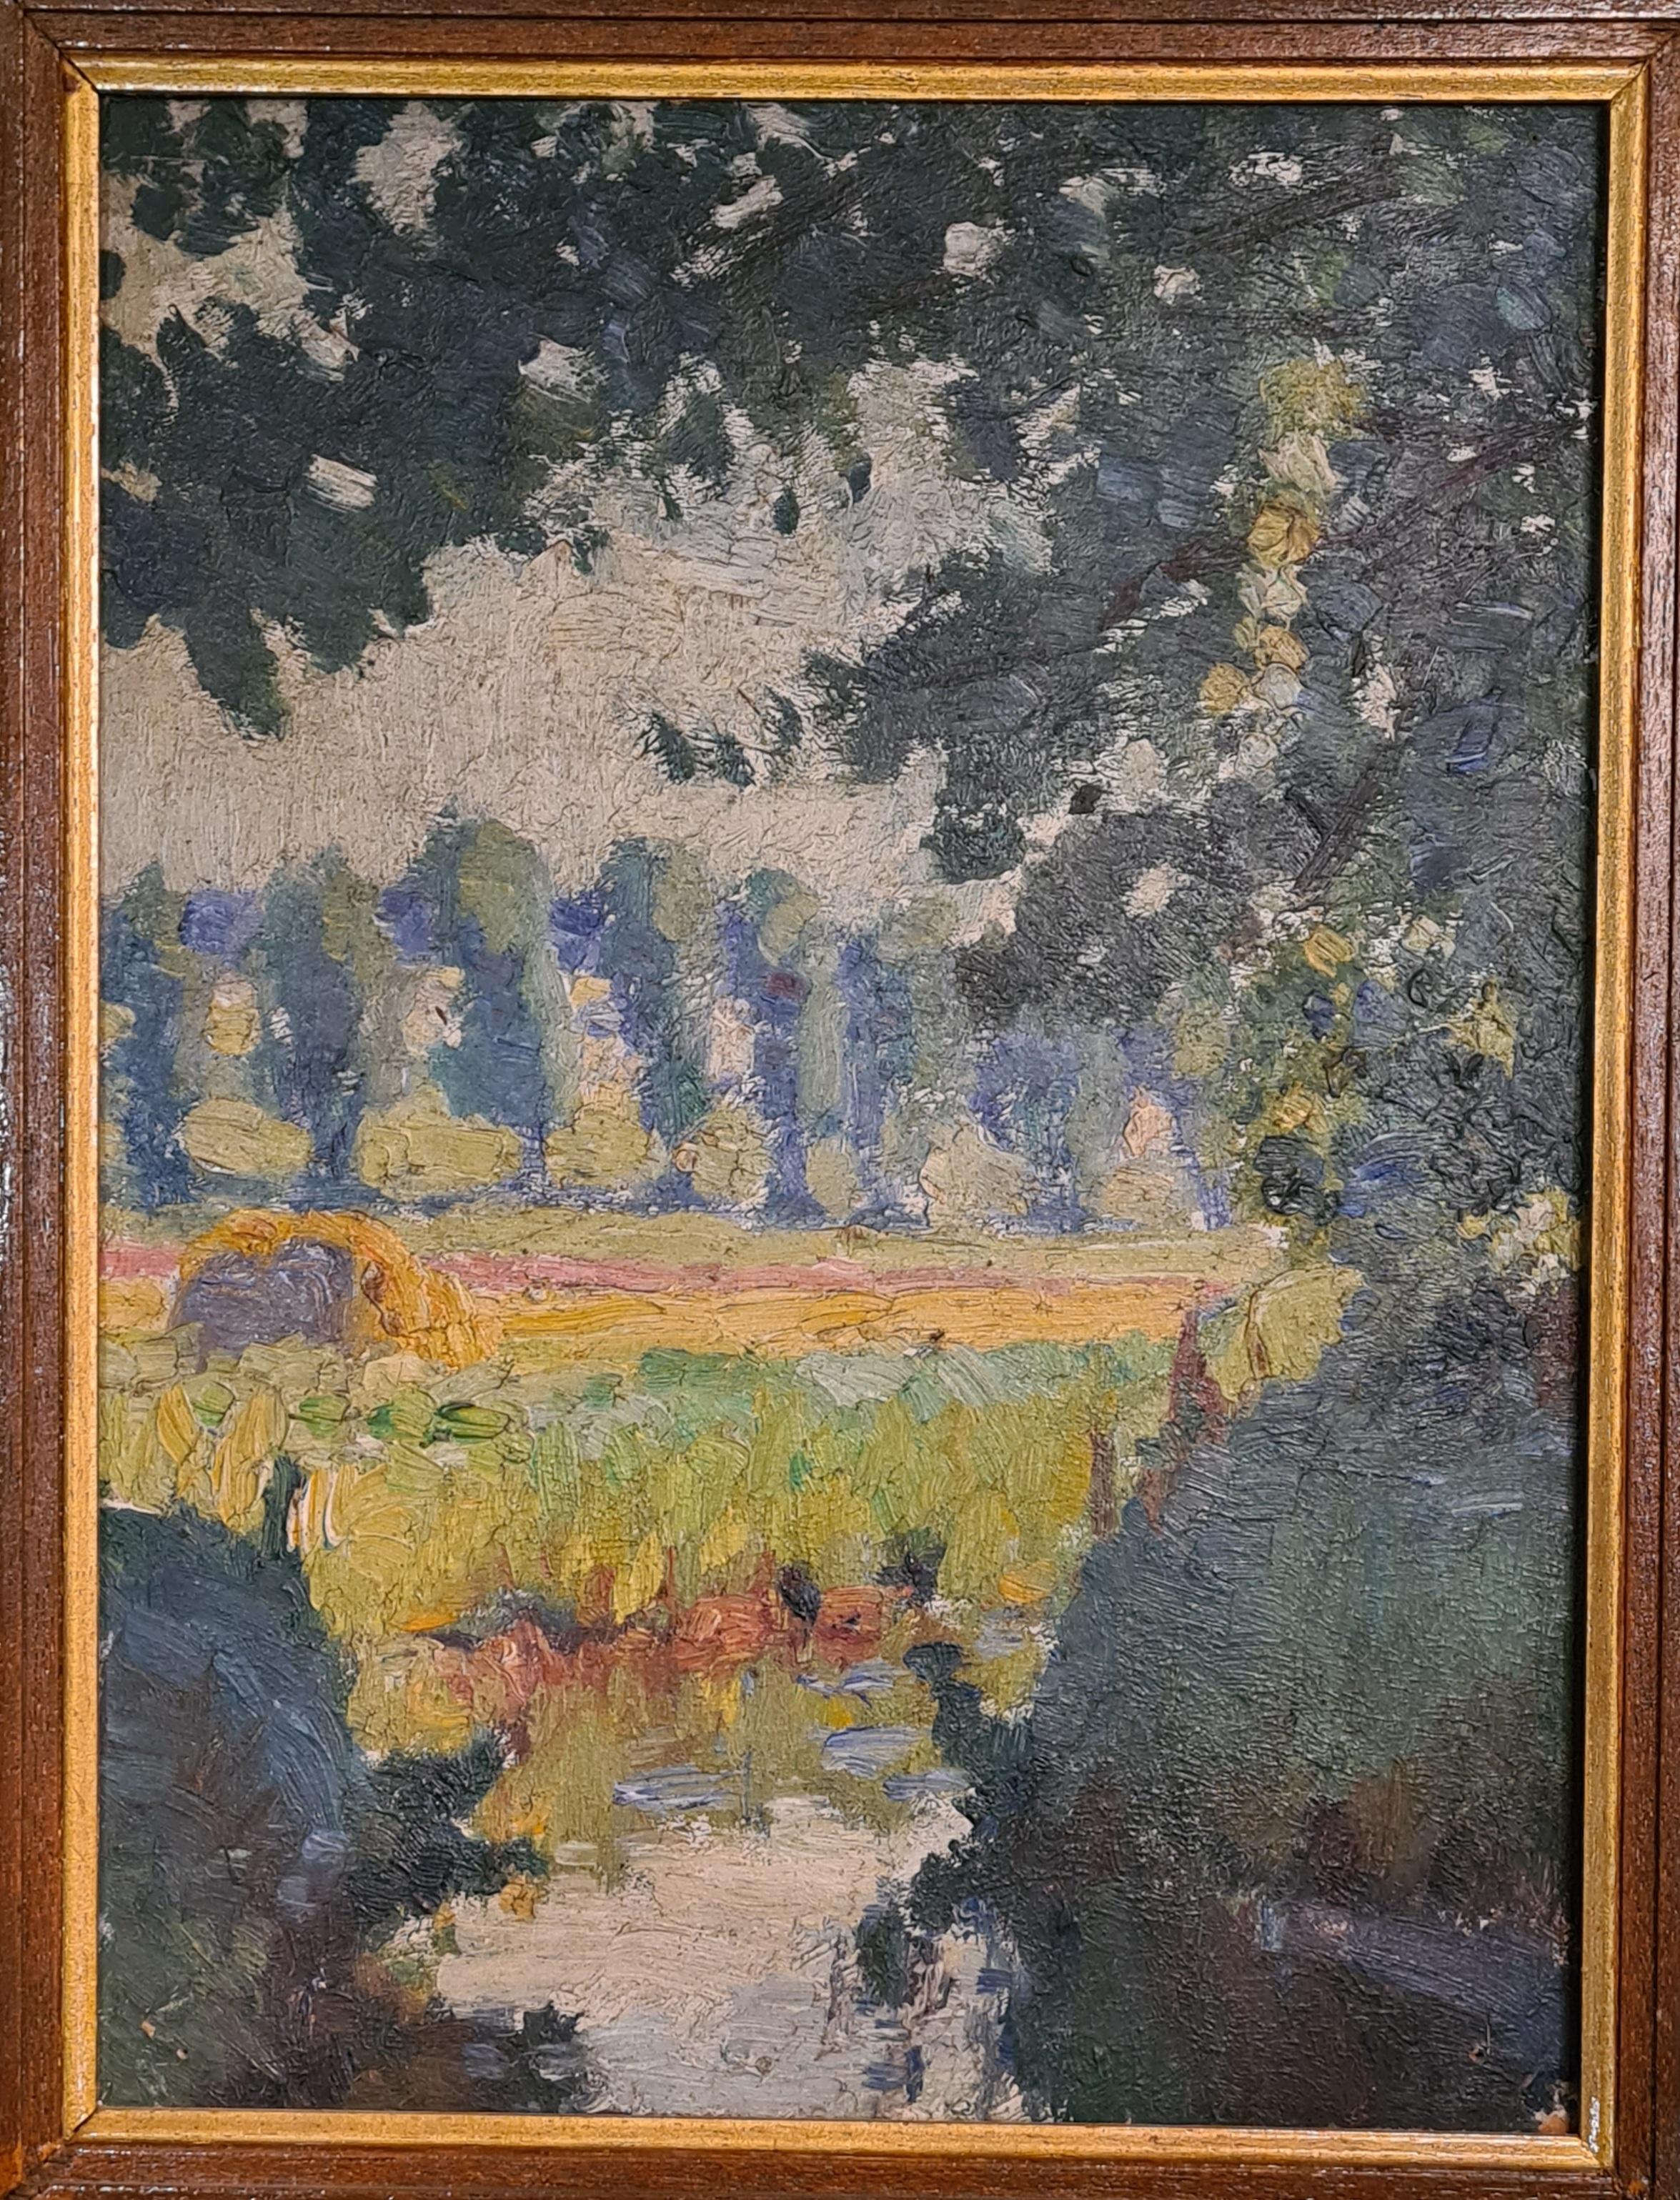 Michel Dufet Landscape Painting - Early 20th C. Barbizon School, Poplars by the Riverbank. Oil on Board.